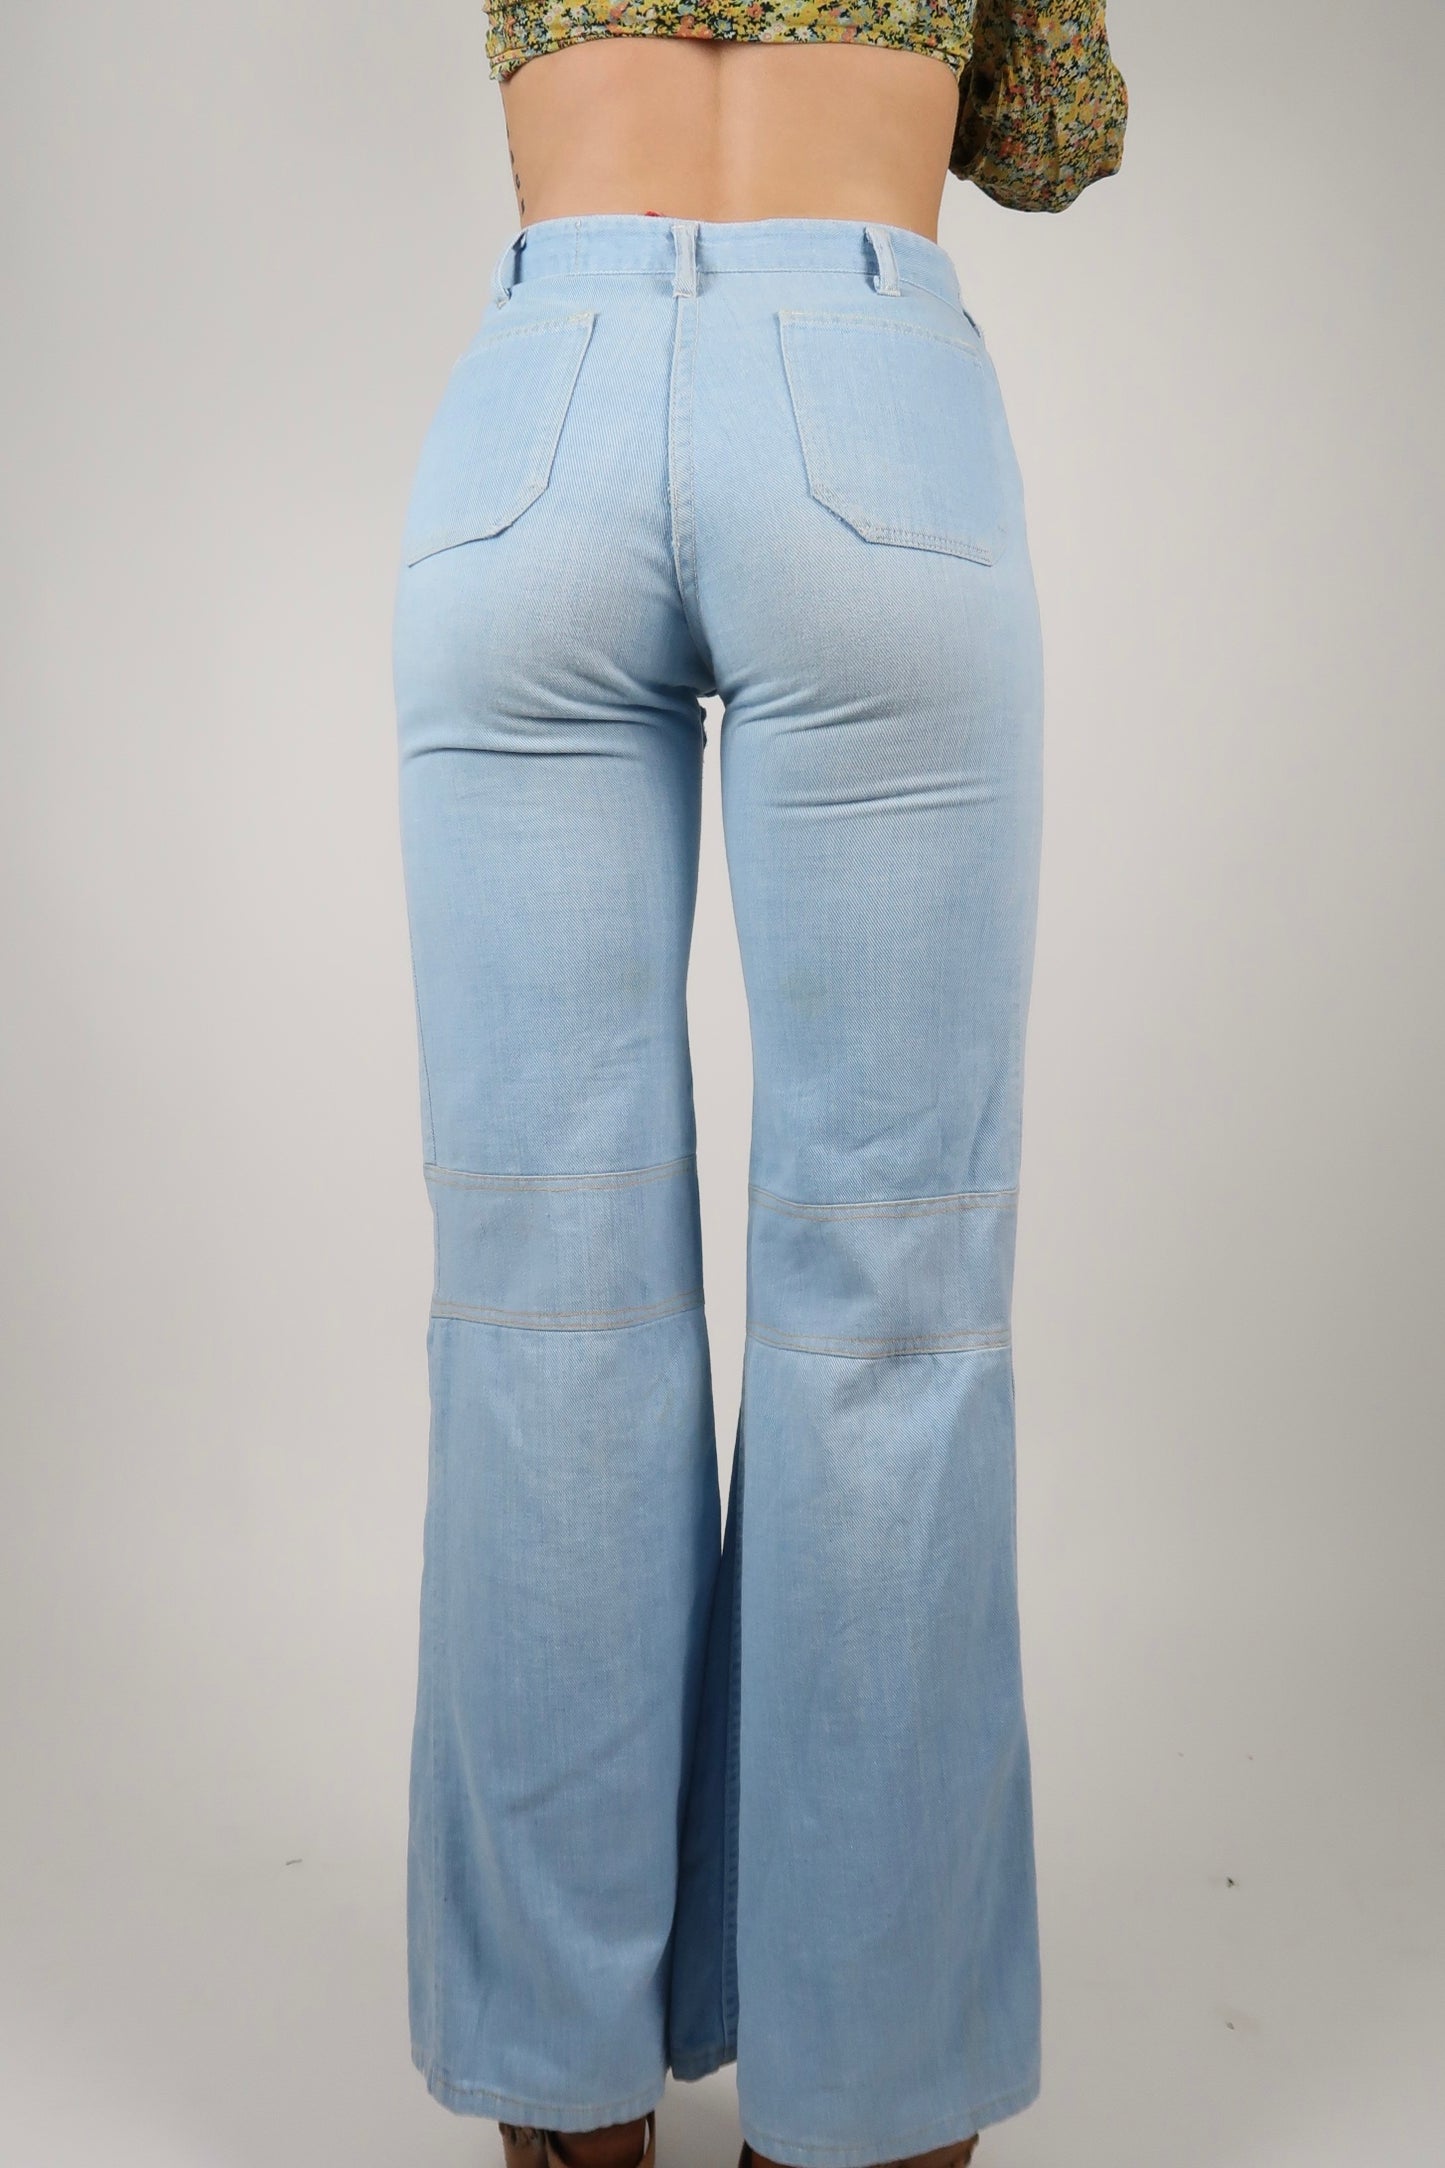 1970s Falmer jeans